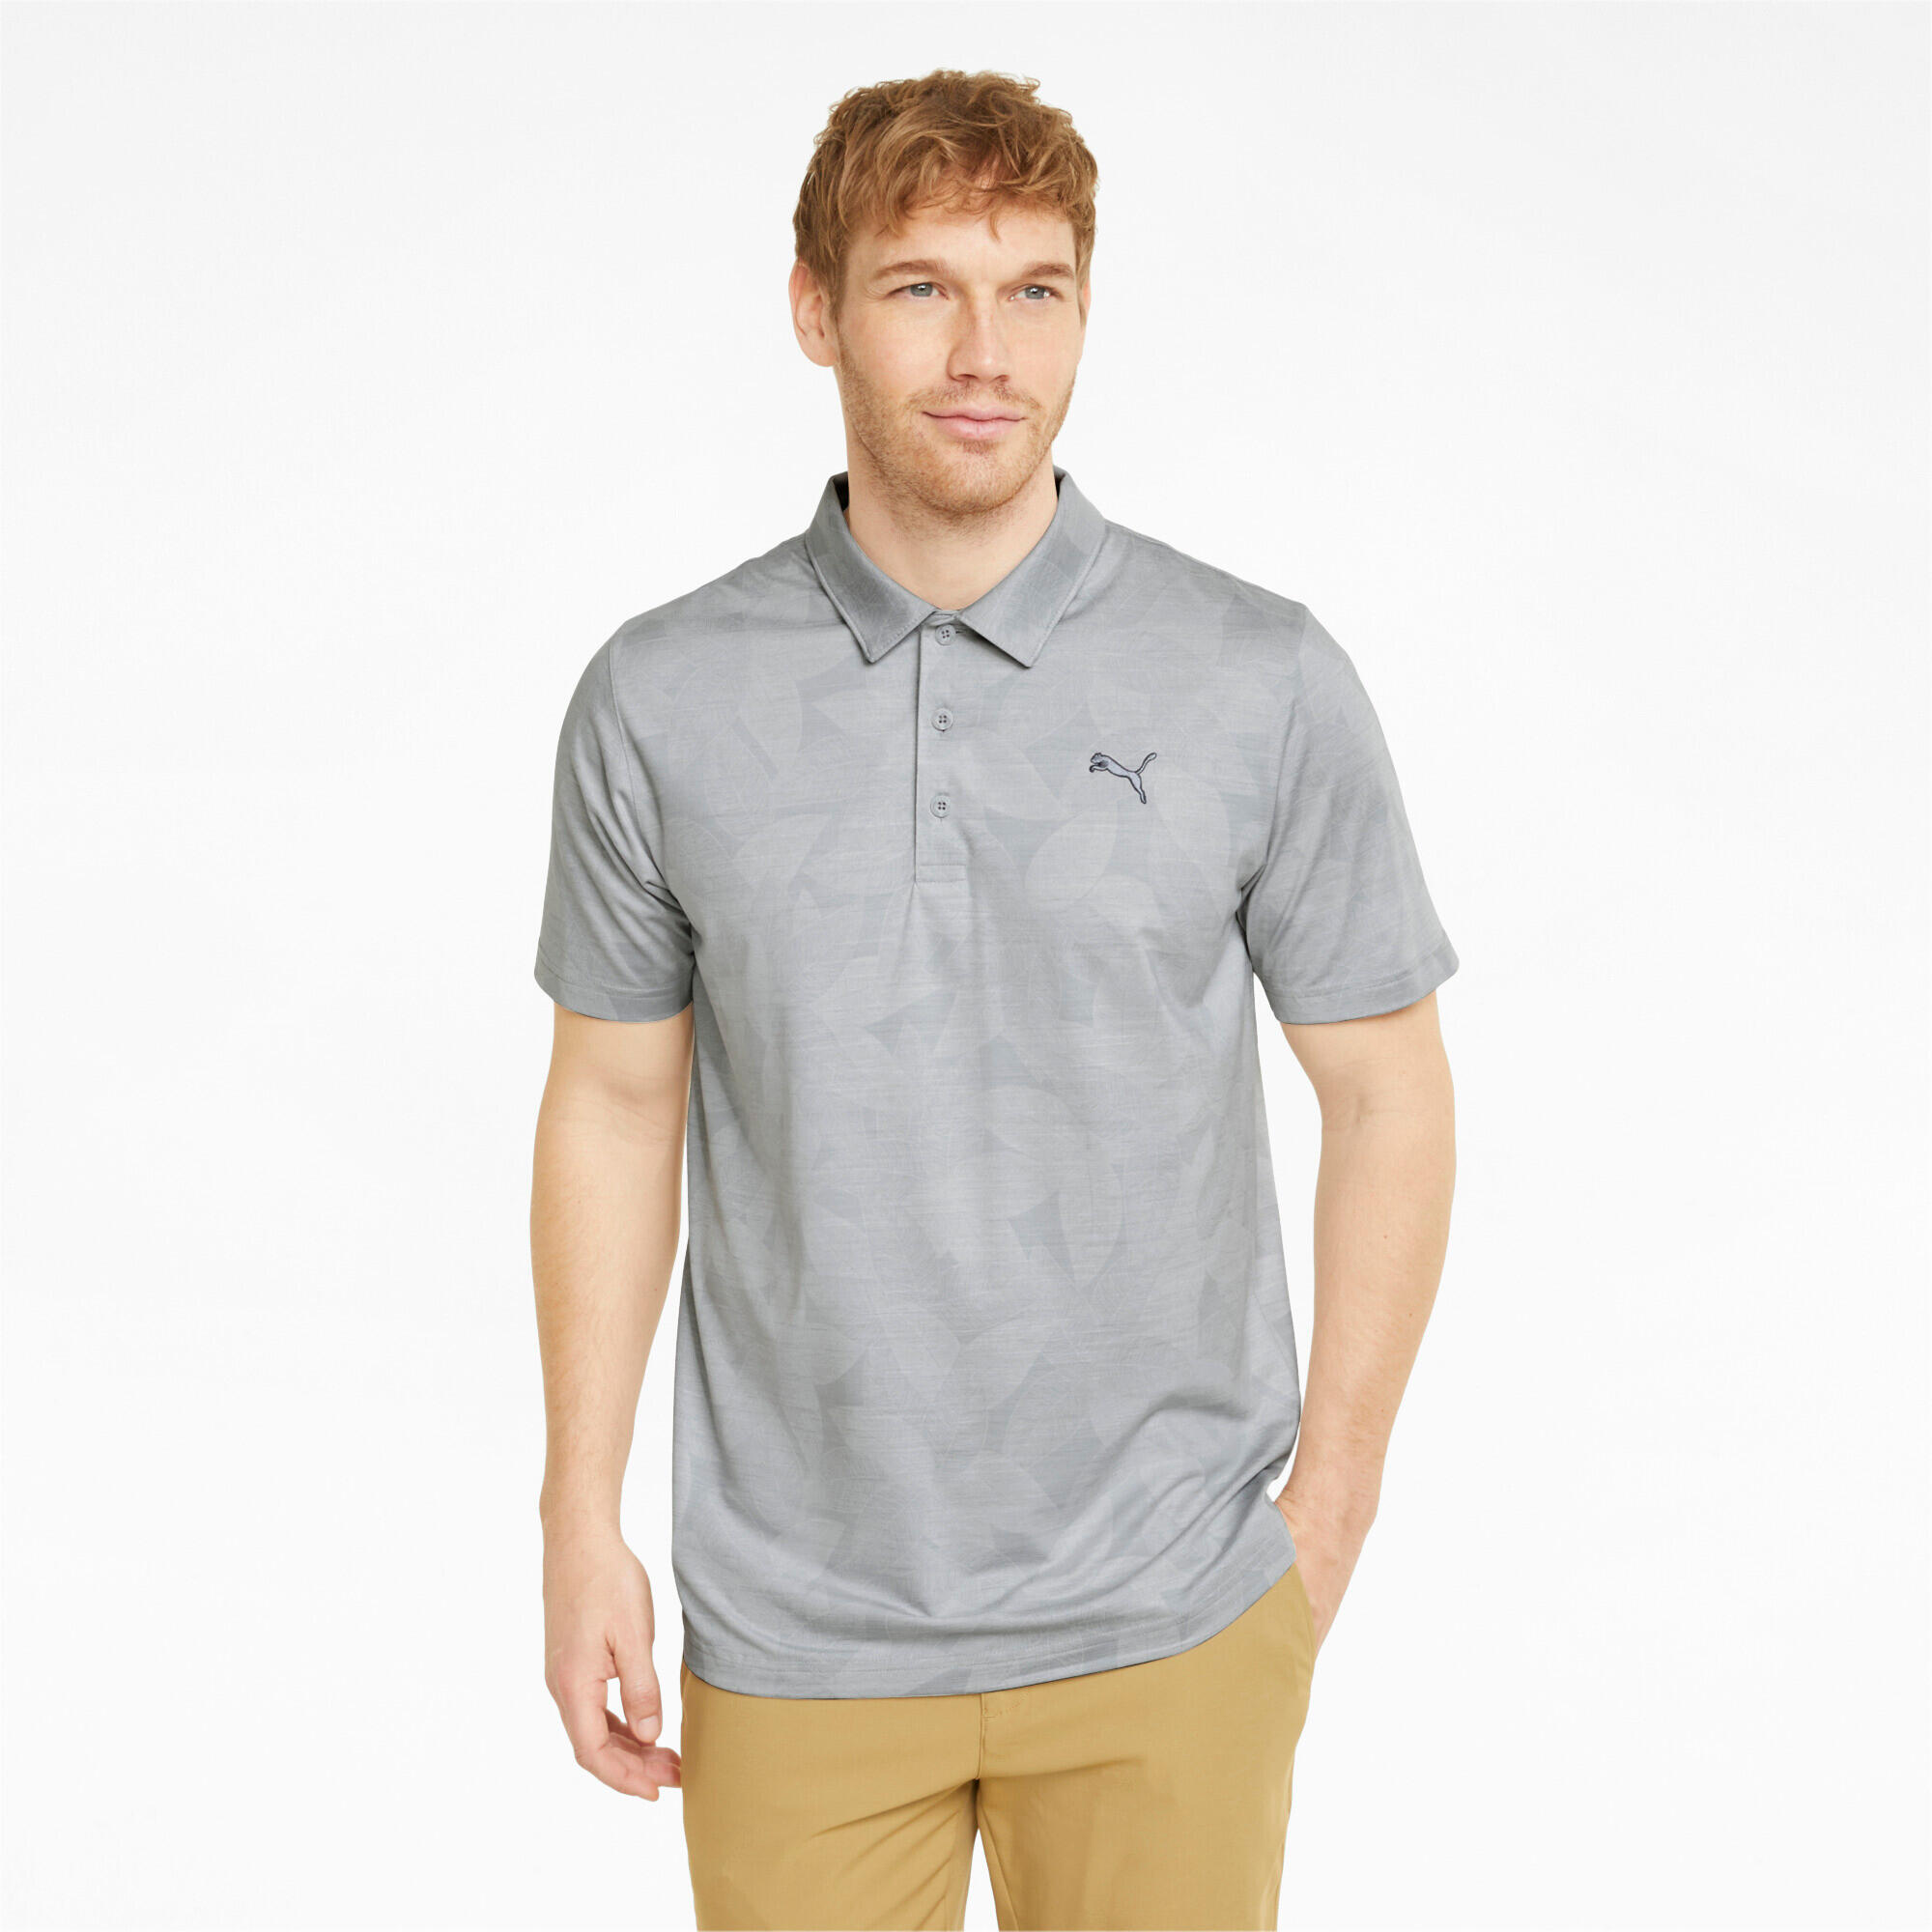 PUMA Mens CLOUDSPUN Leaflet Golf Polo Shirt - QUIET SHADE Heather